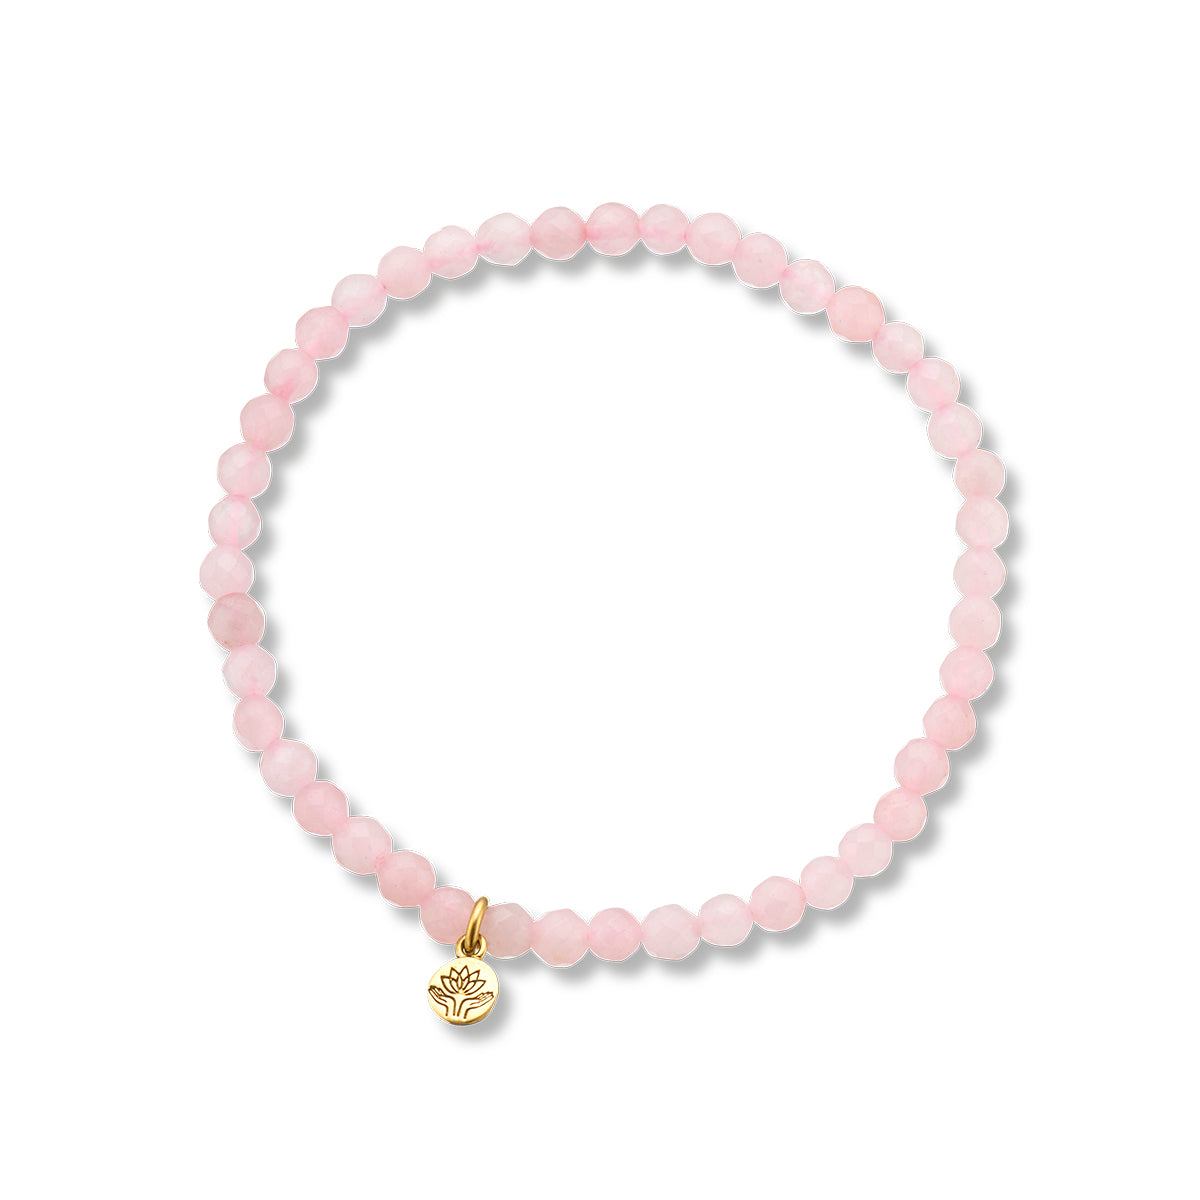 Love you always mum rose quartz gem bracelet